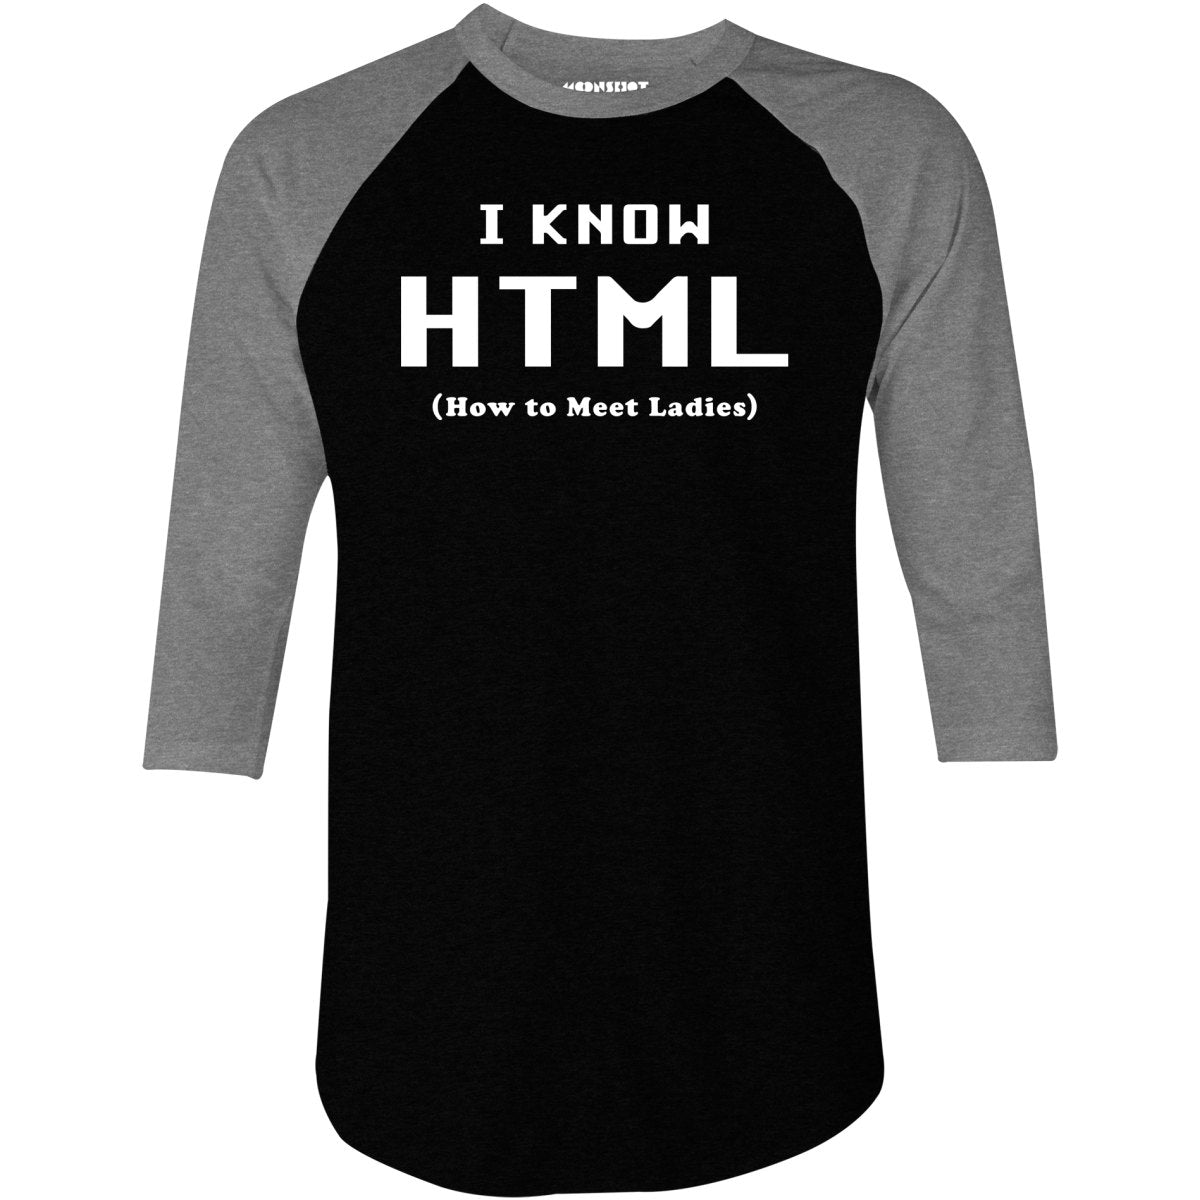 I Know HTML - How to Meet Ladies - 3/4 Sleeve Raglan T-Shirt